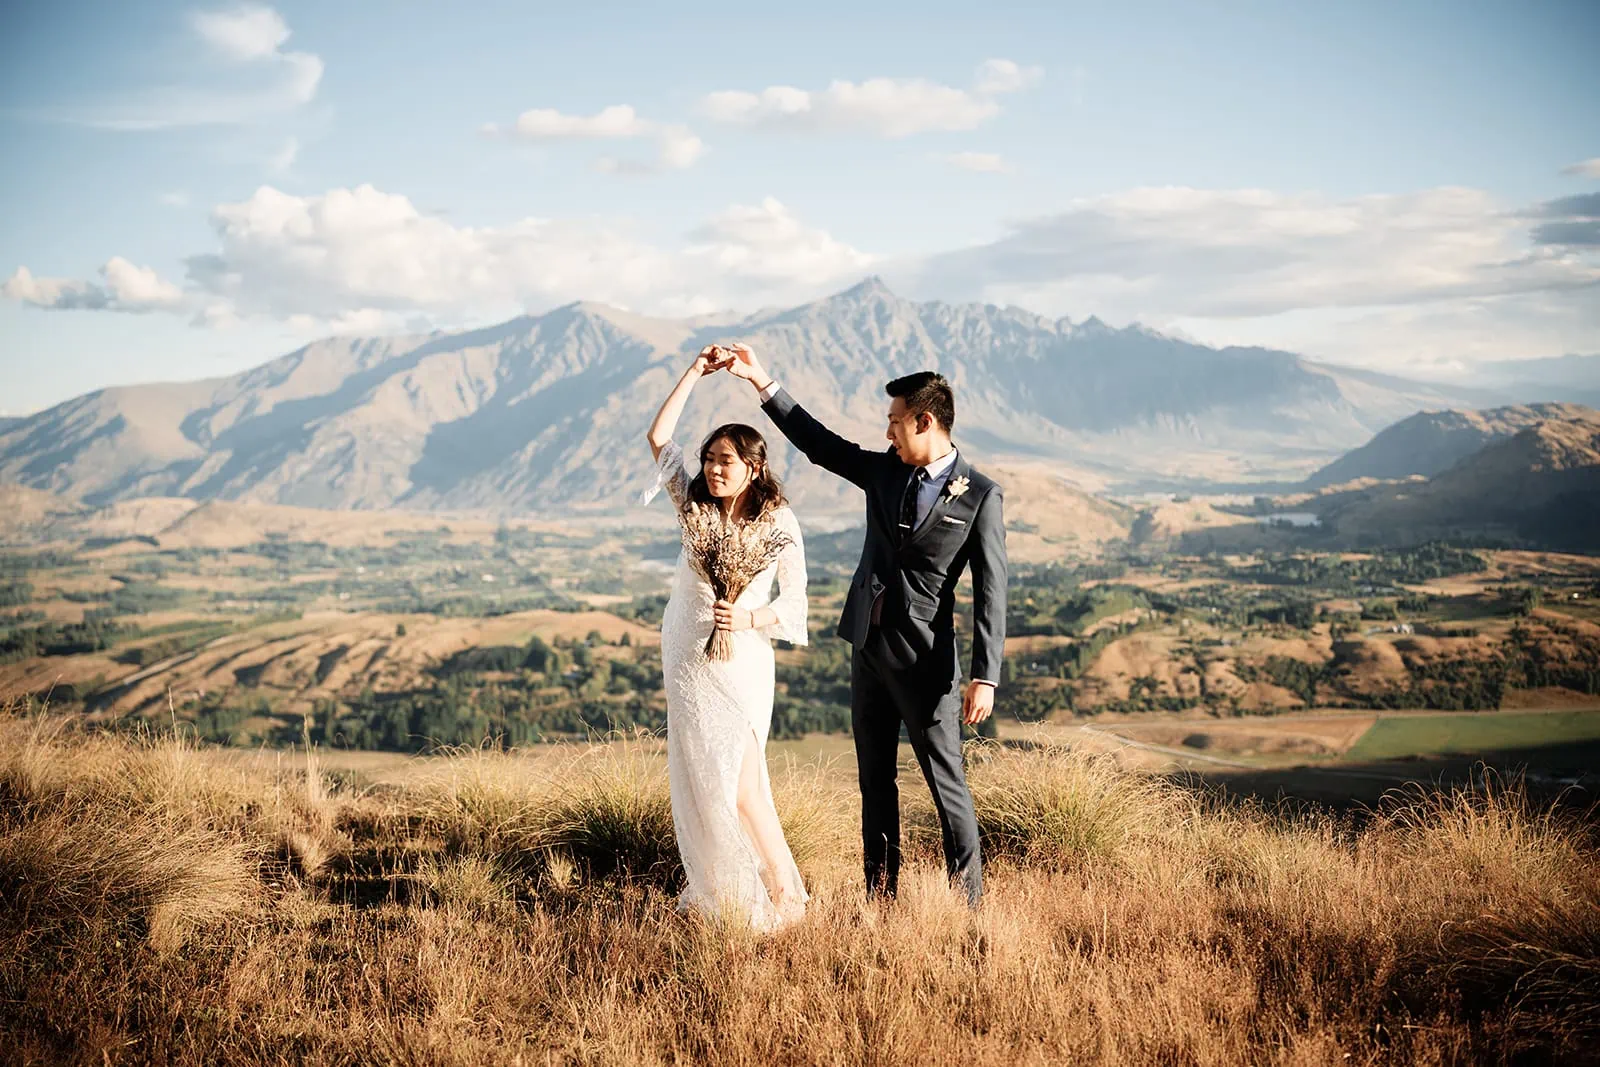 Keywords: bride, groom, hill, mountains.